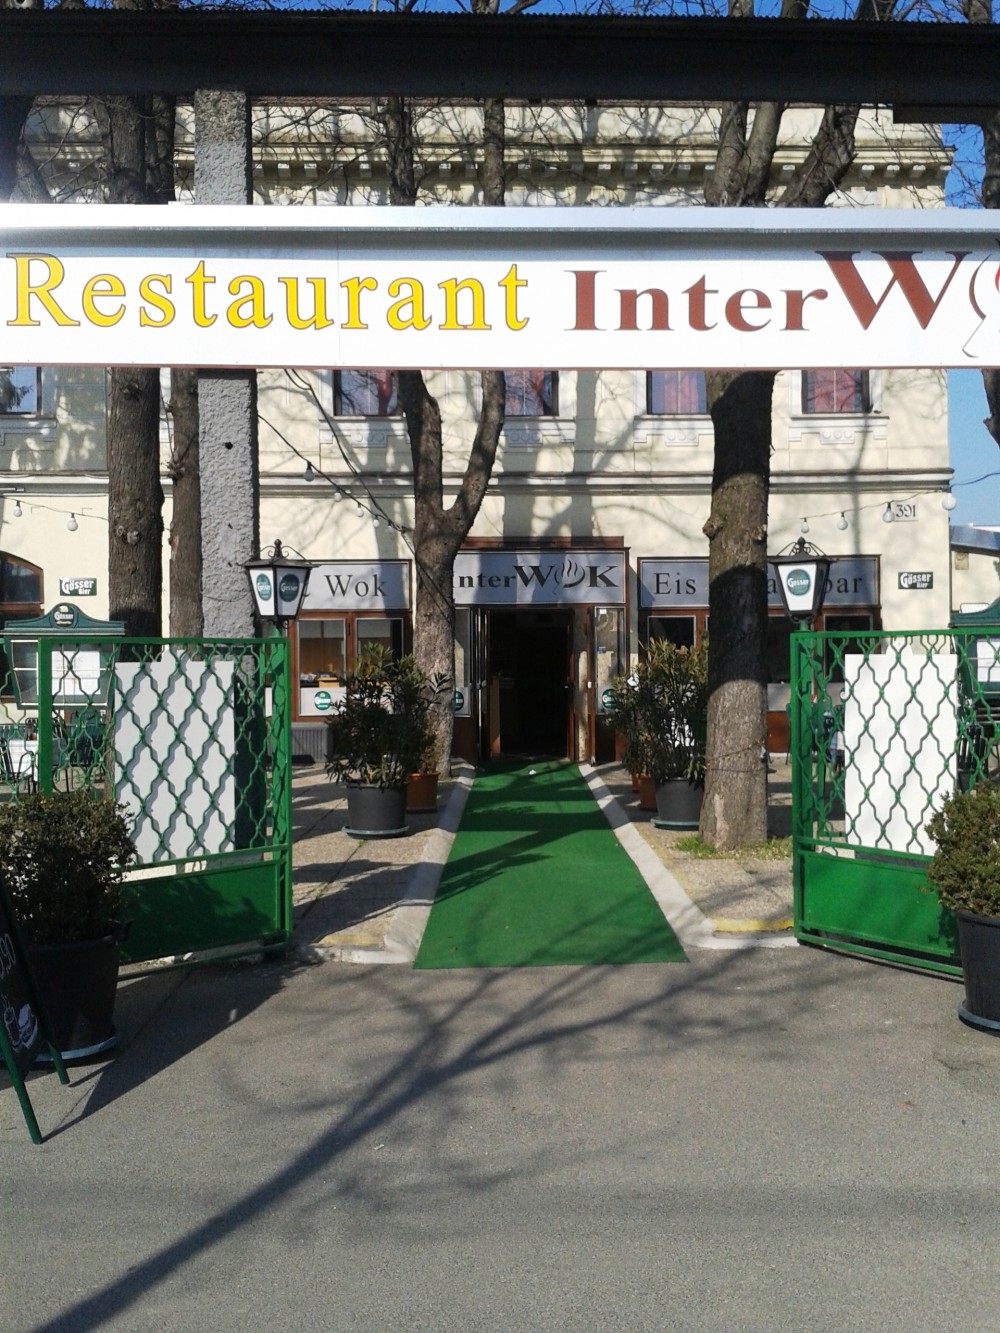 Interwok - Das Lokal & der Gastgarten - Buffet Restaurant Interwok - Wien